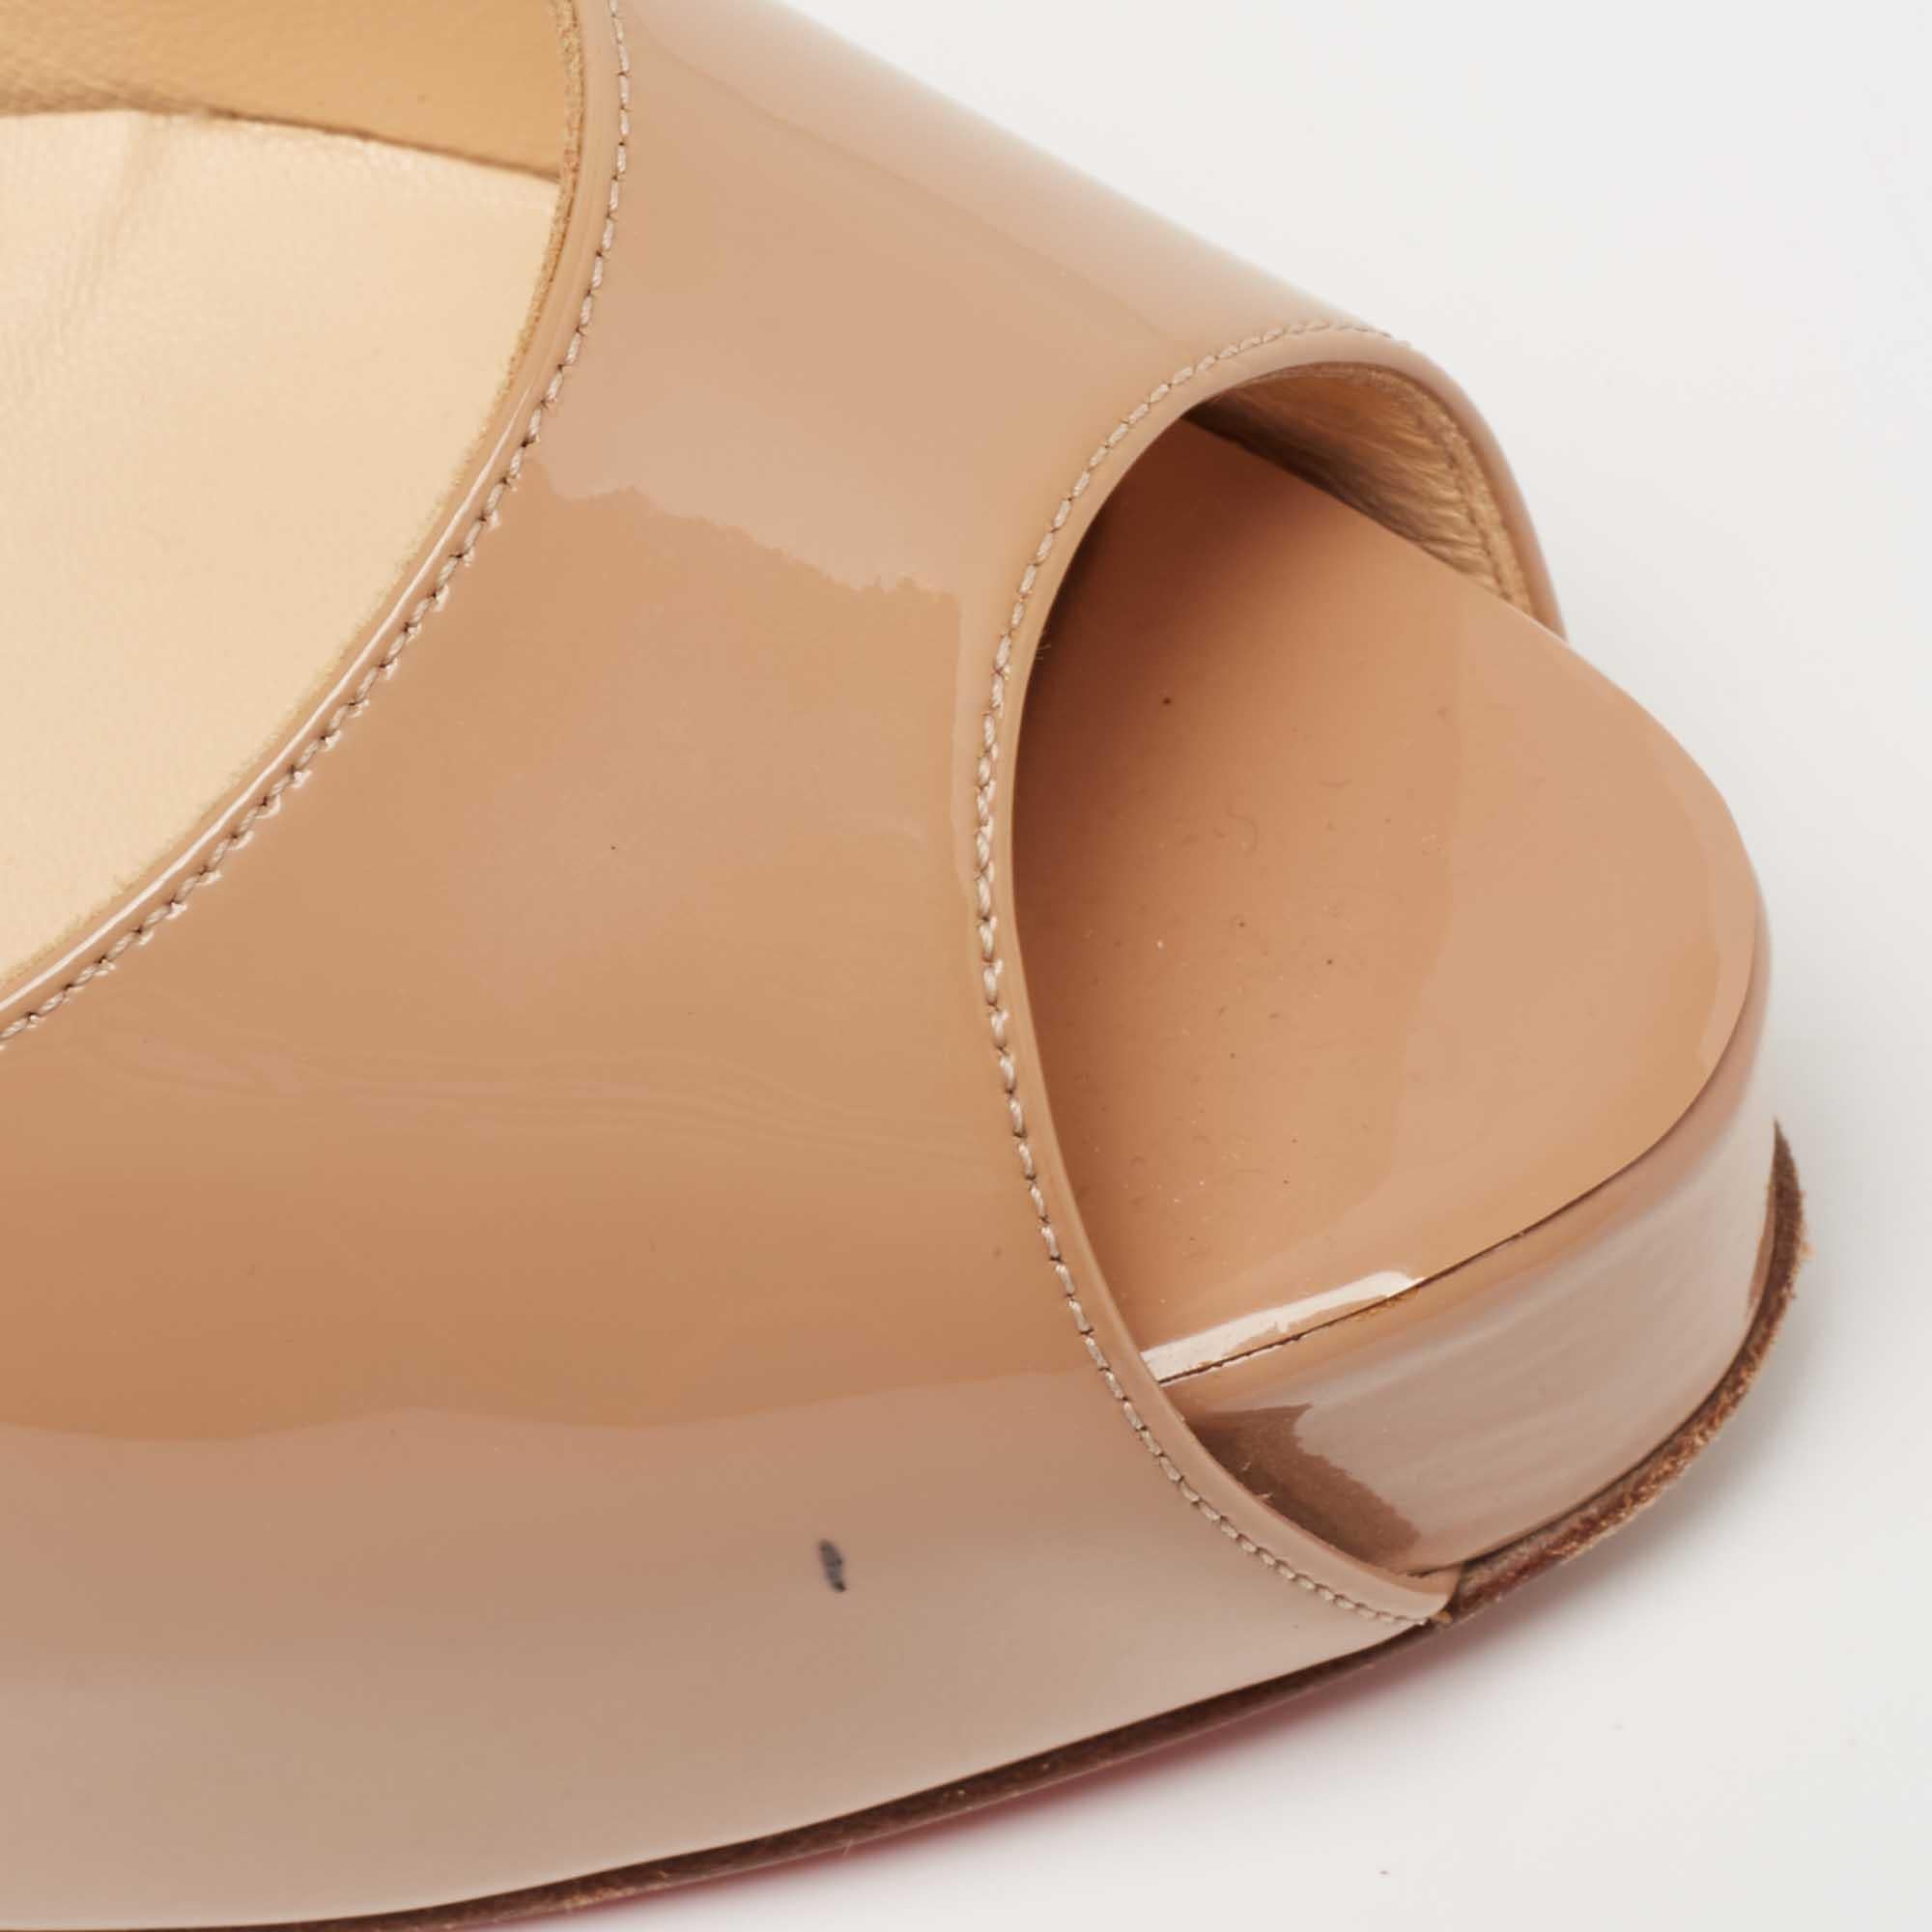 Christian Louboutin Patent Leather Very Prive Peep Toe Platform Pumps Size 37.5 In Good Condition For Sale In Dubai, Al Qouz 2